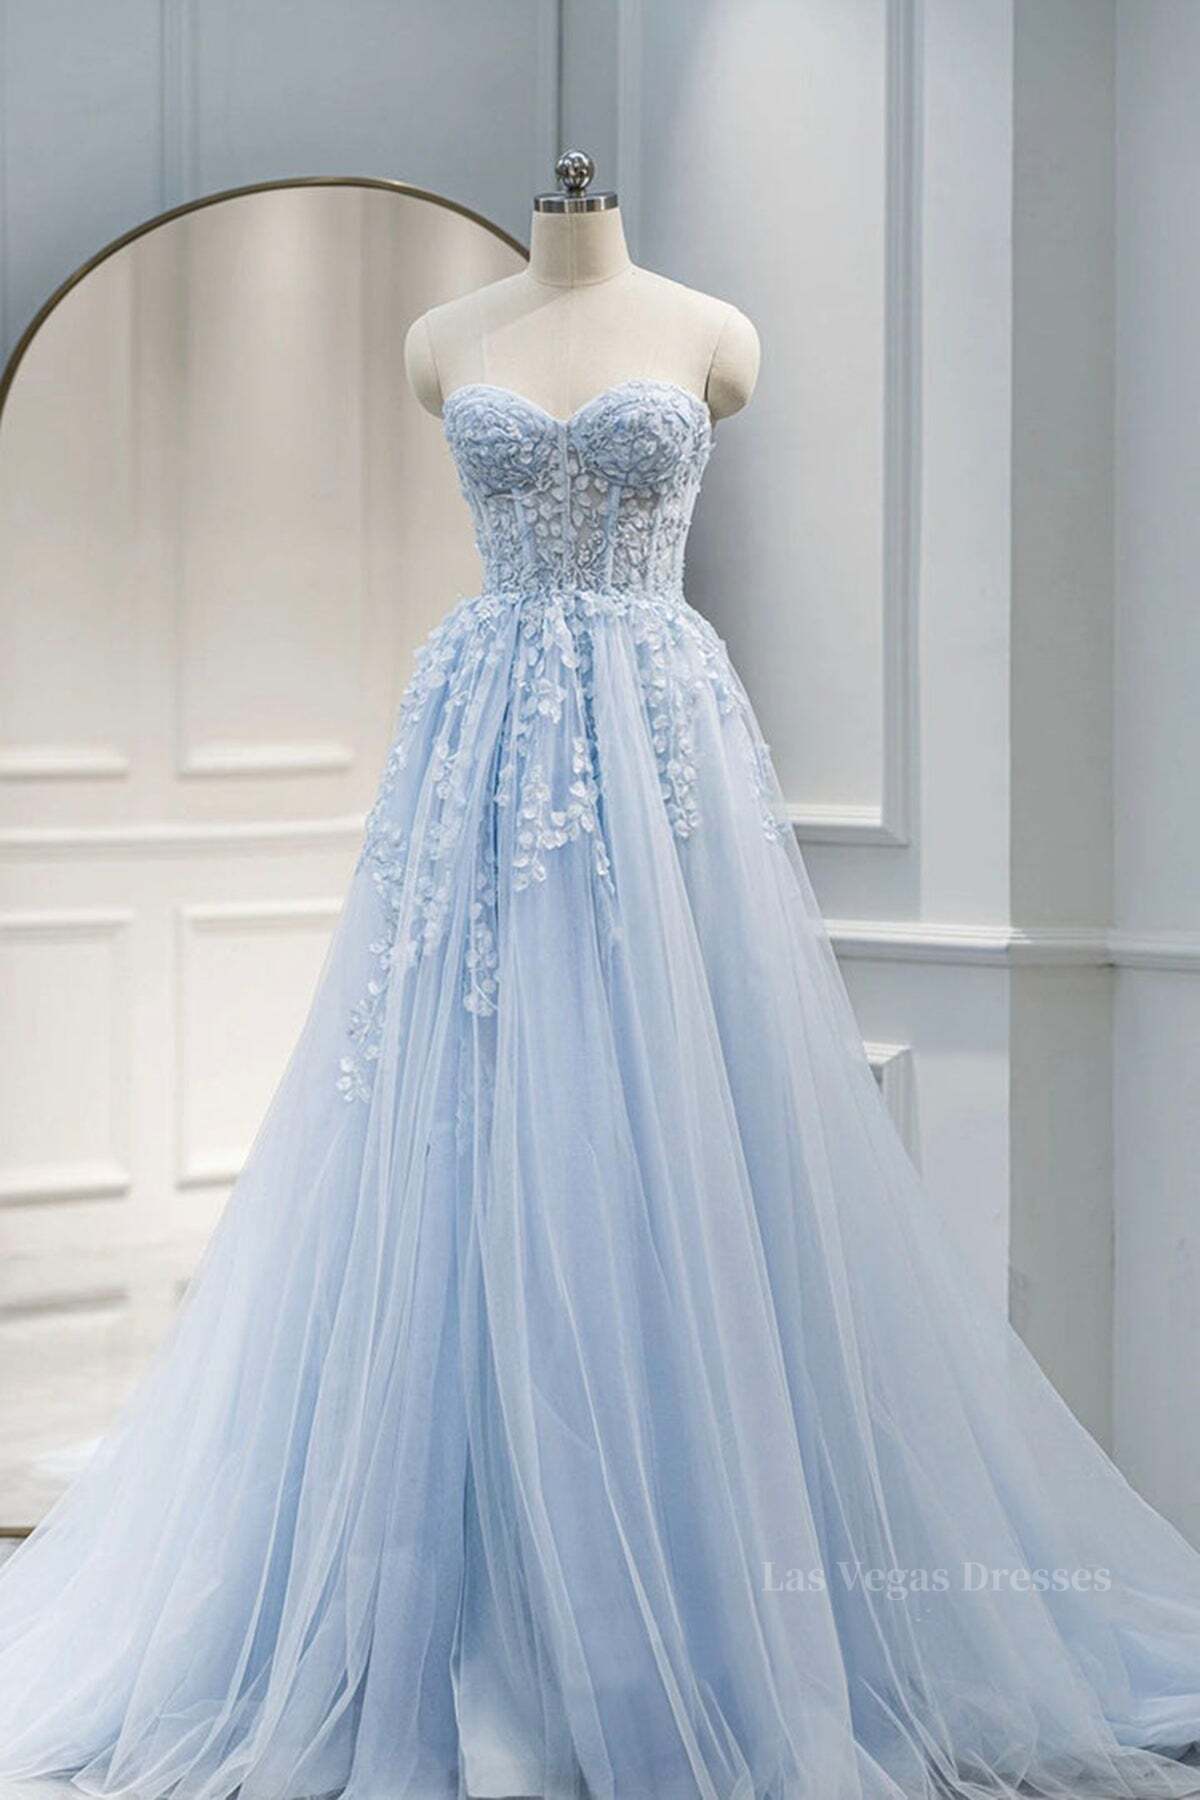 Sweetheart Neck Light Blue Lace Tulle Long Prom Dress, Light Blue Lace Formal Graduation Evening Dress